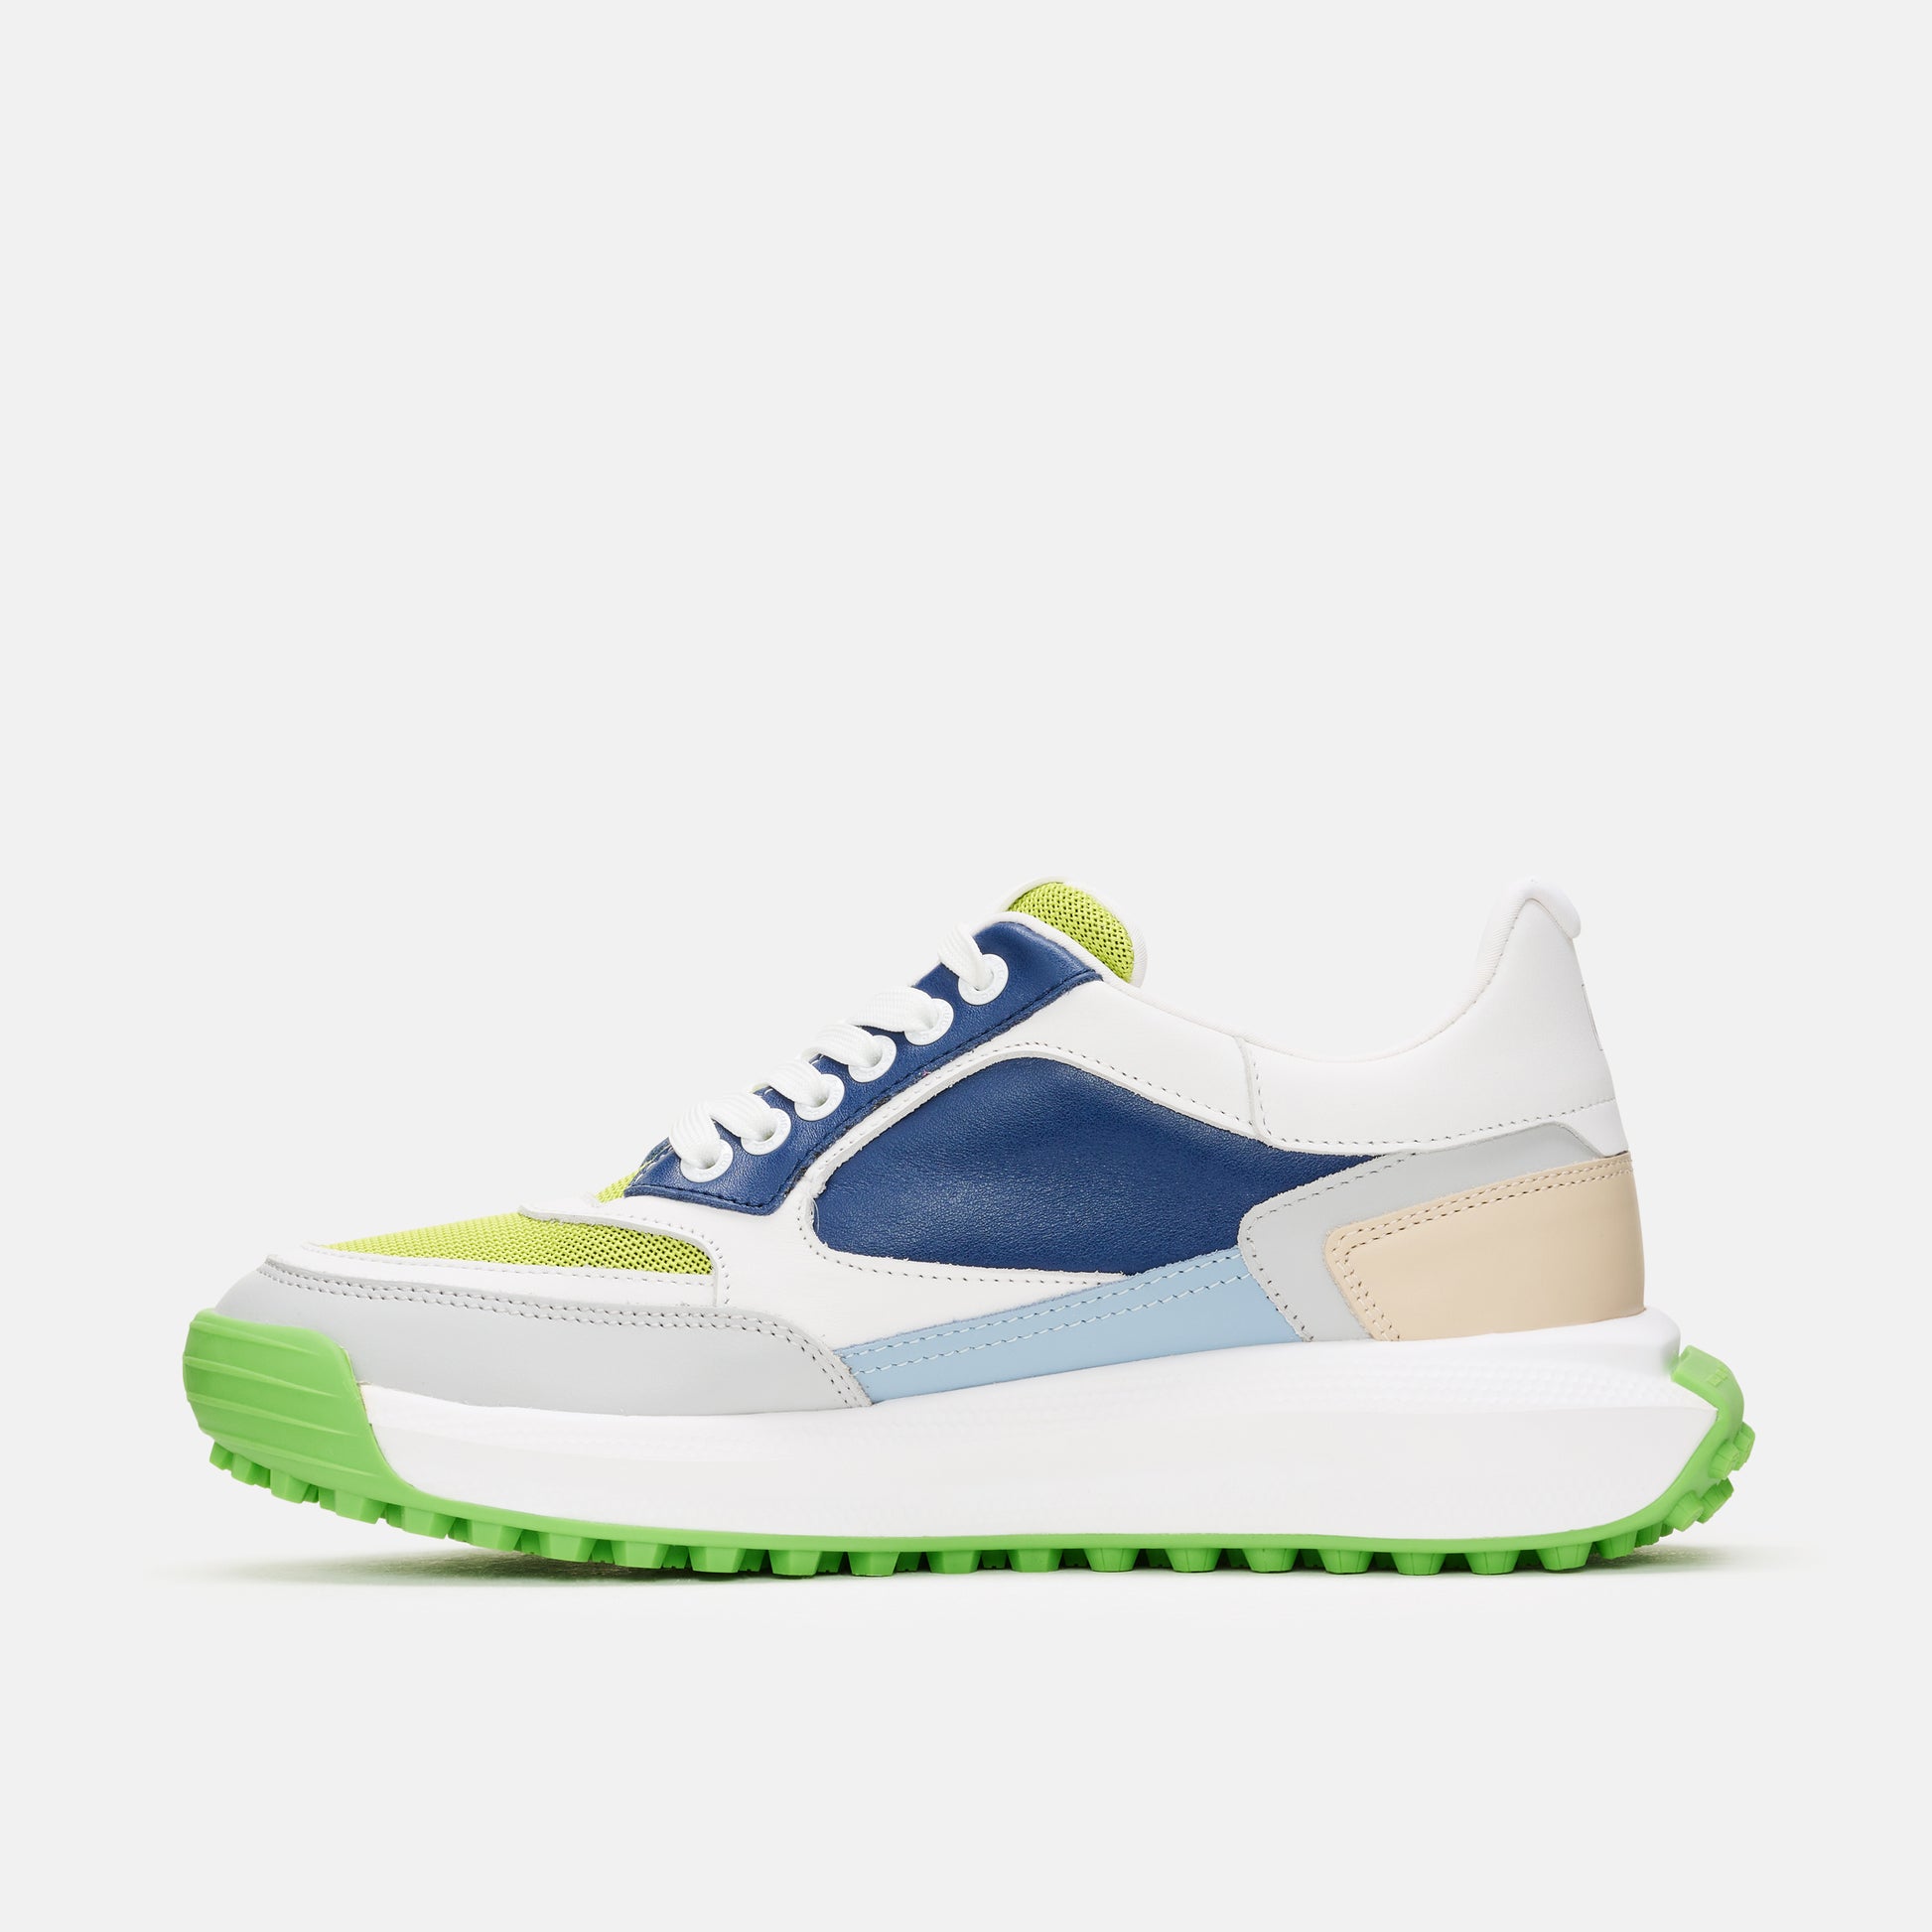 Lime Mens Golf Shoe